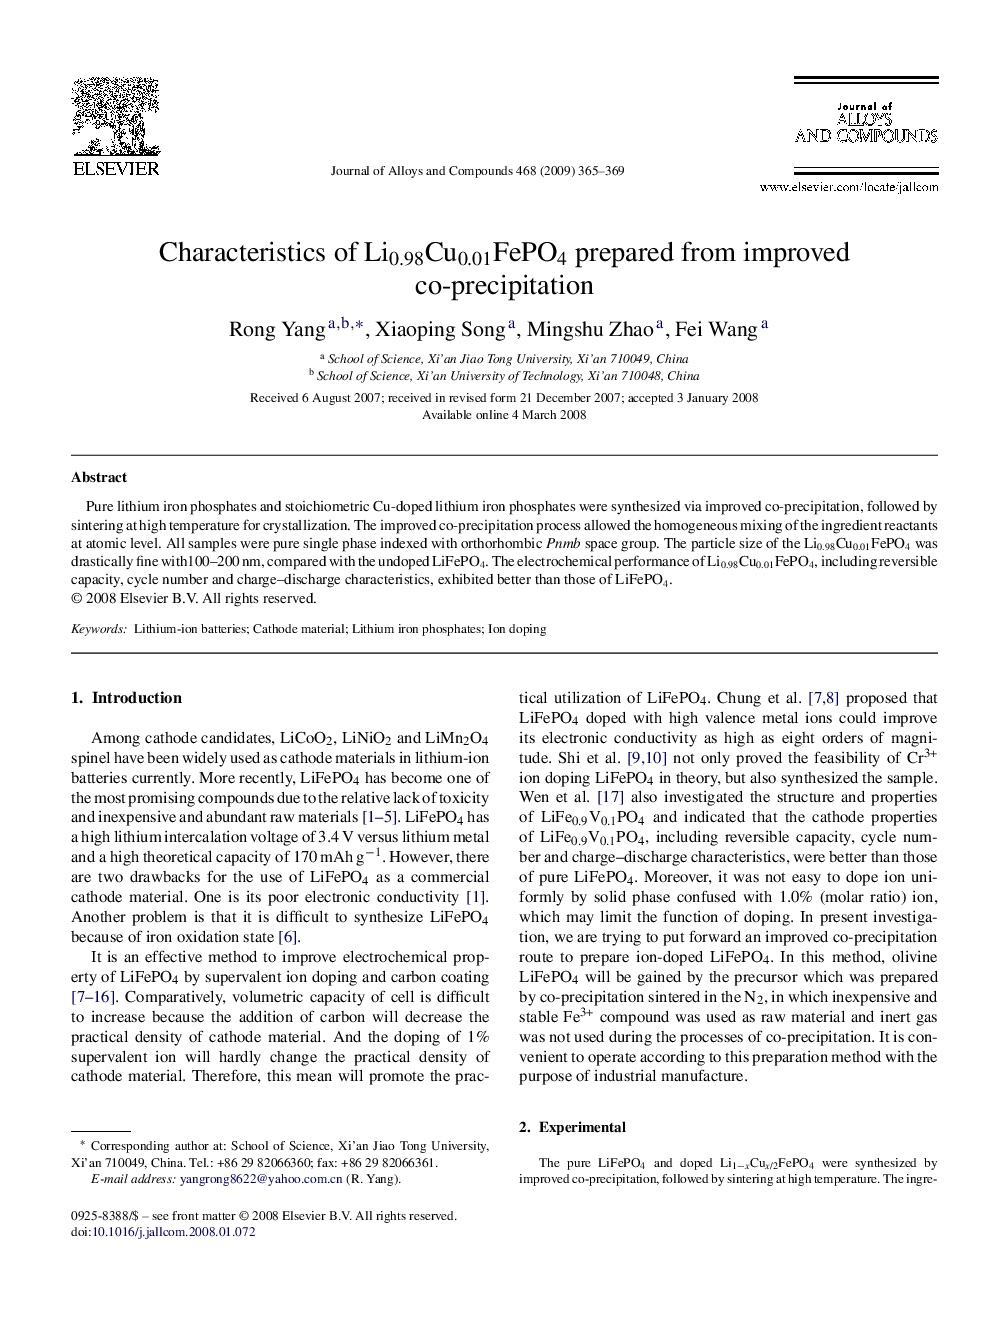 Characteristics of Li0.98Cu0.01FePO4 prepared from improved co-precipitation